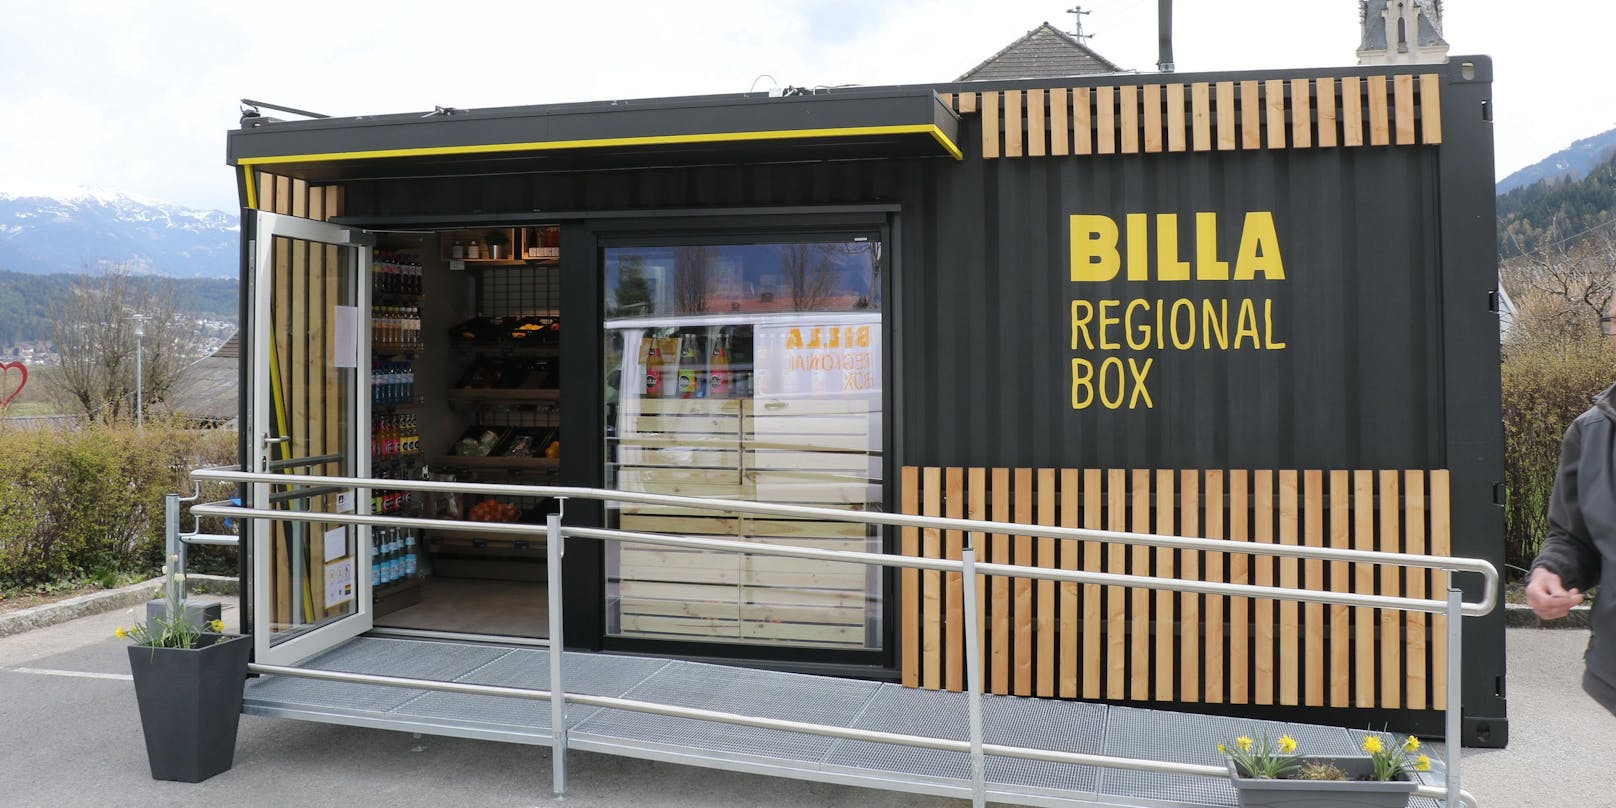 Die Billa Regional Box in Baldramsdorf.